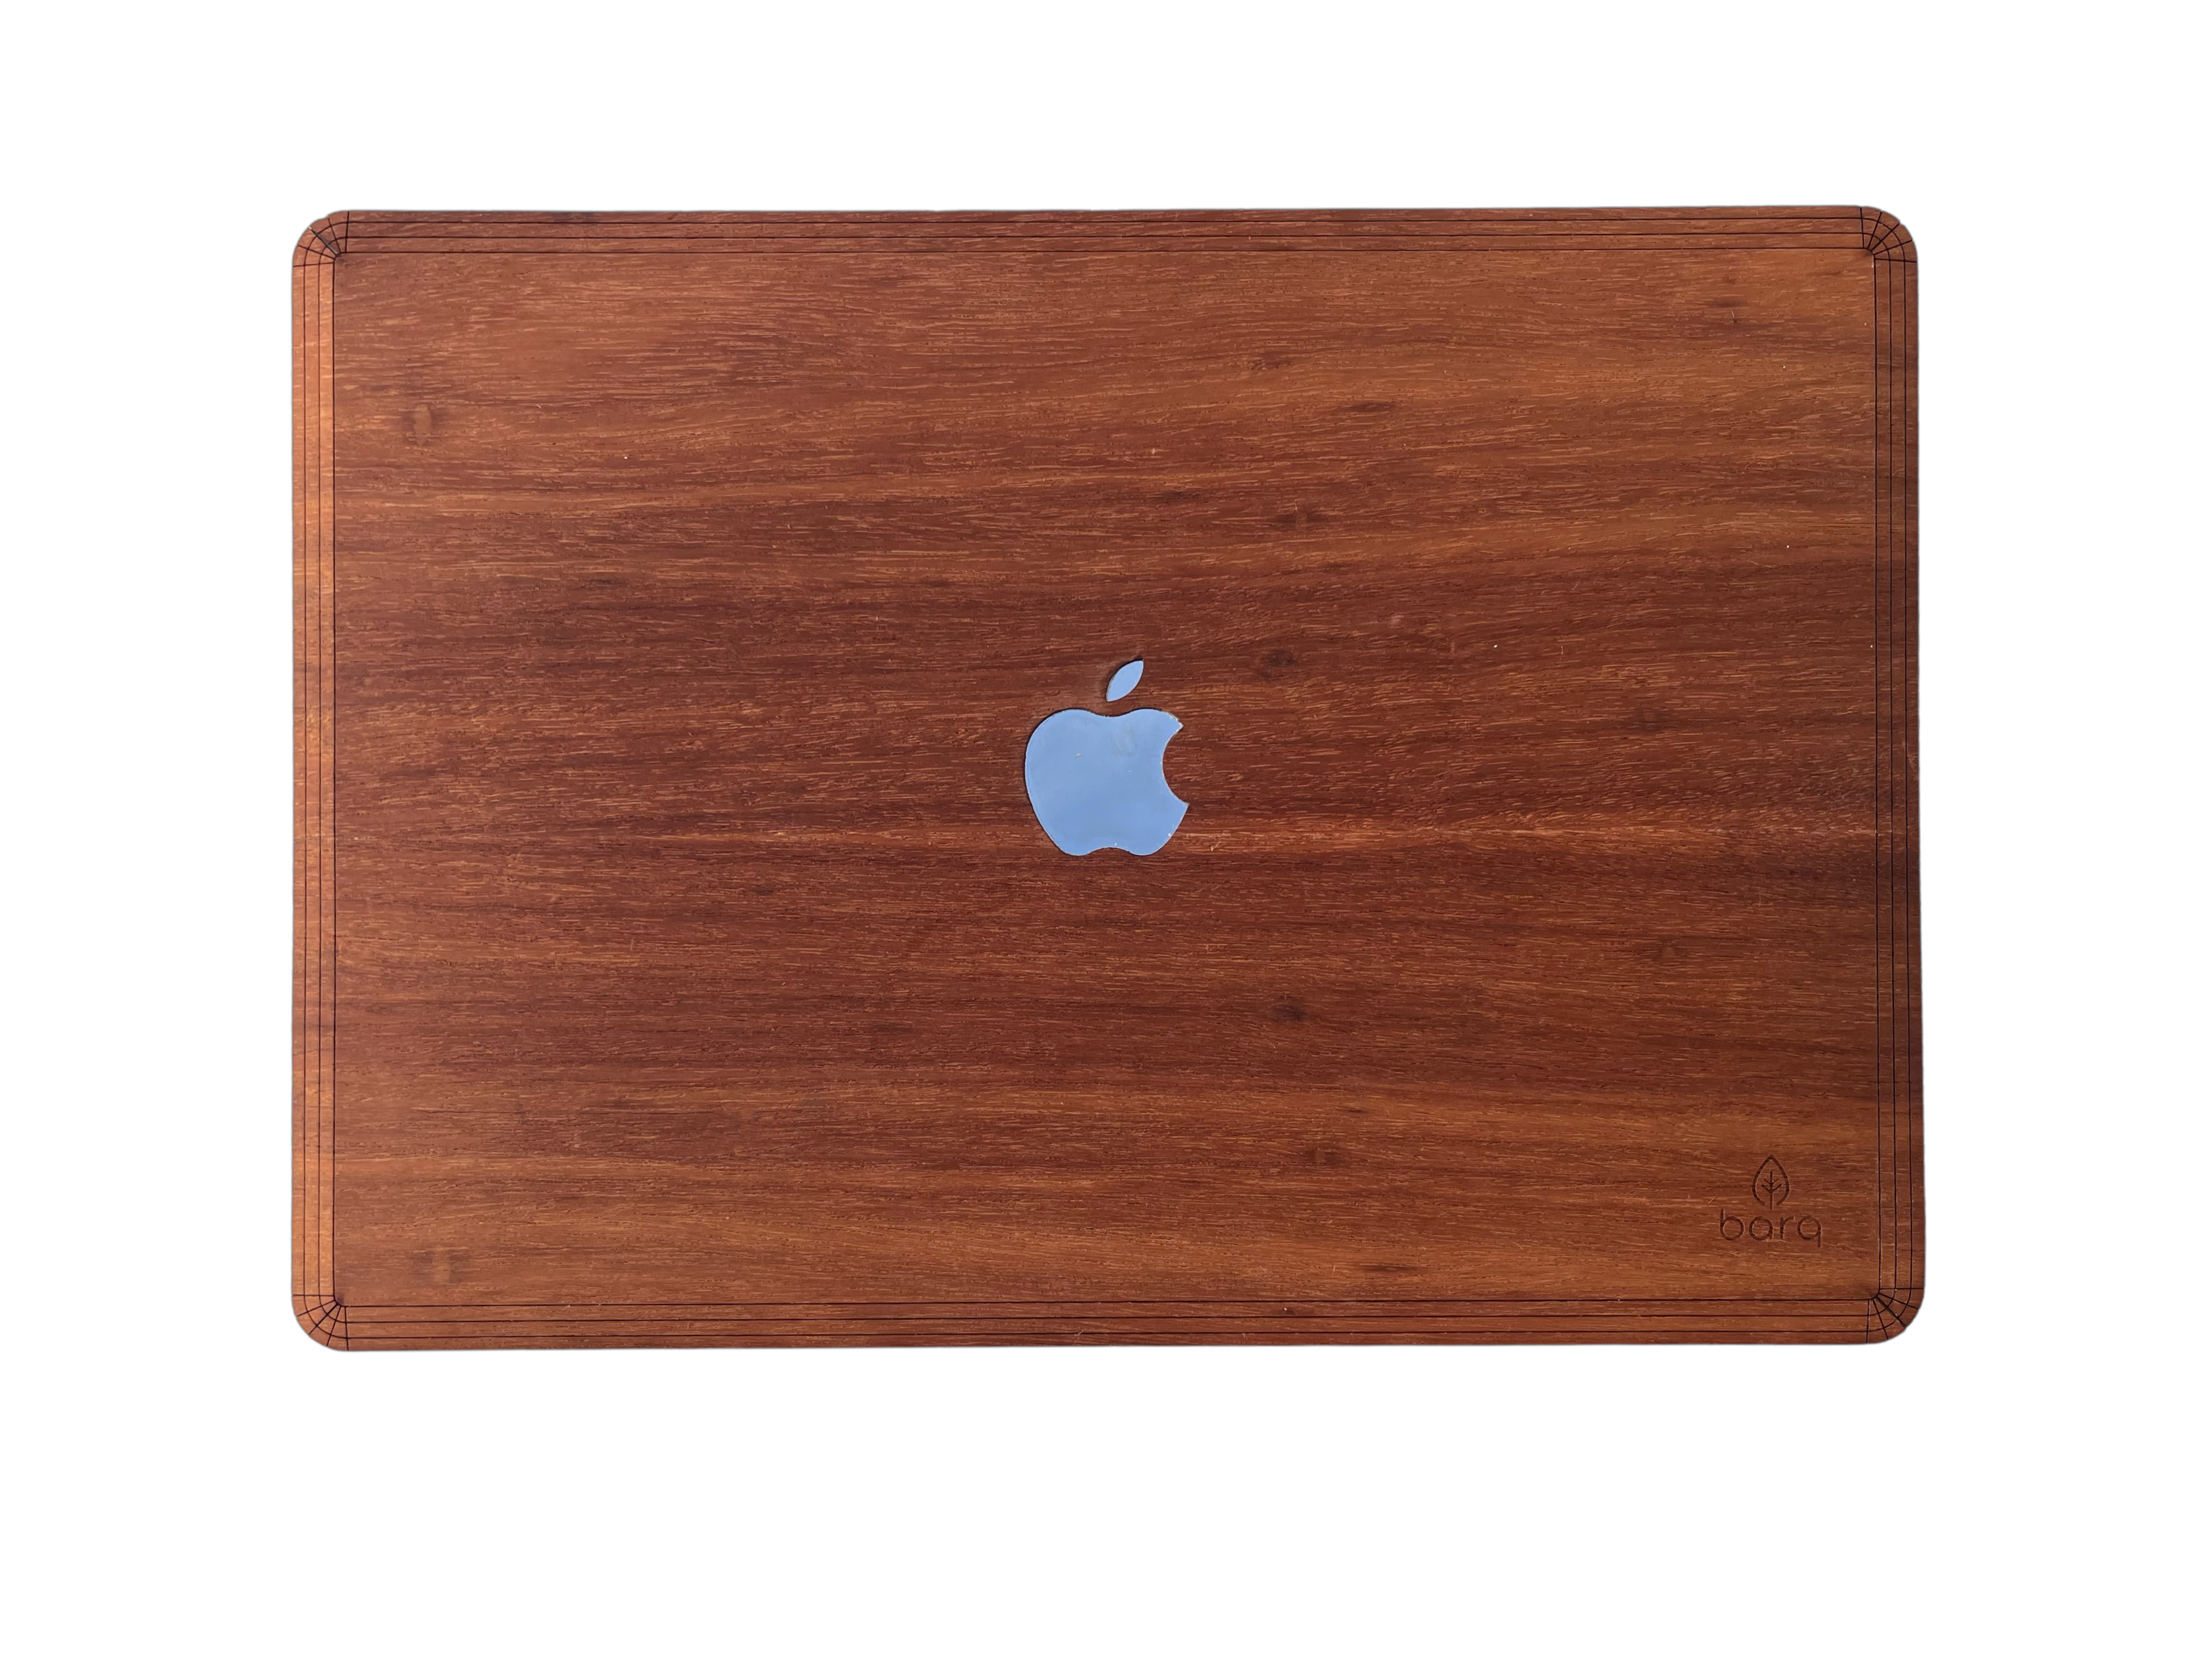 Santos - MacBook Skin Made From Real Wood